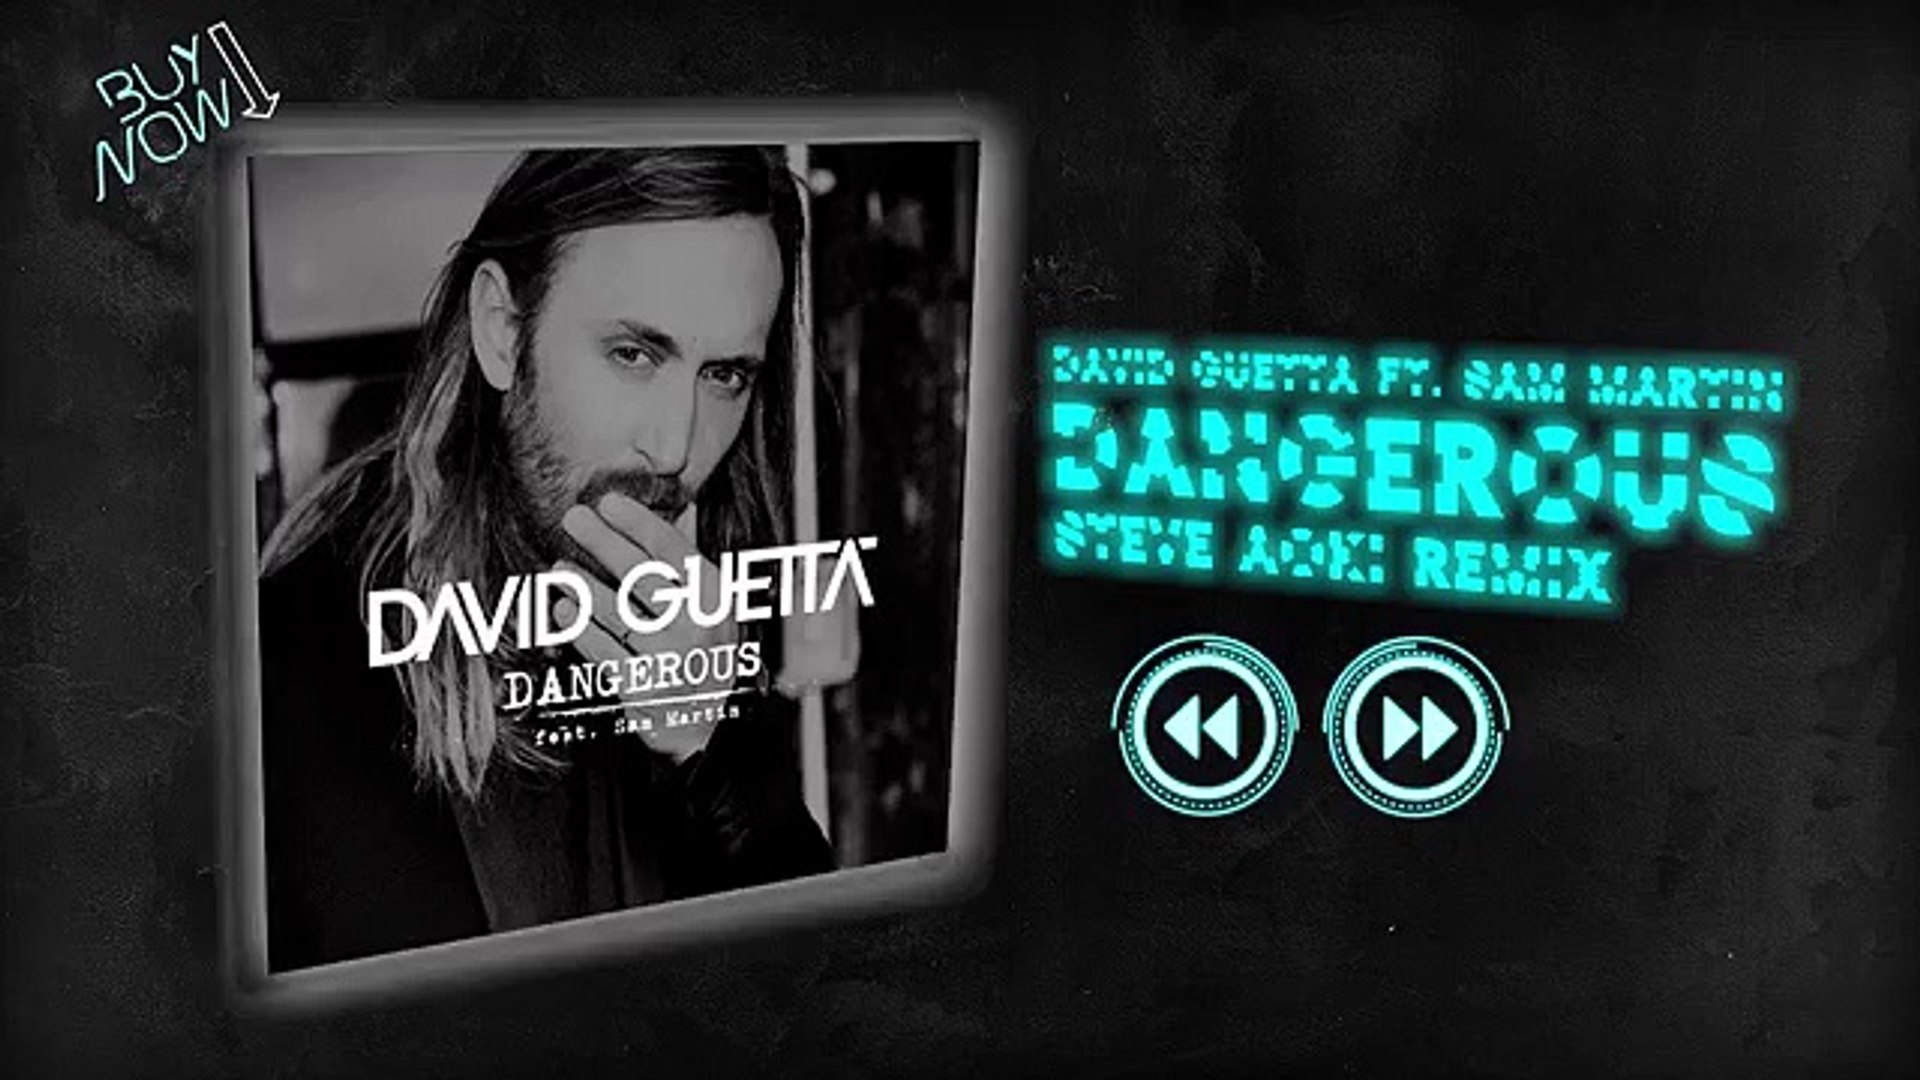 Dangerous (Steve Aoki Remix) - David Guetta - video Dailymotion